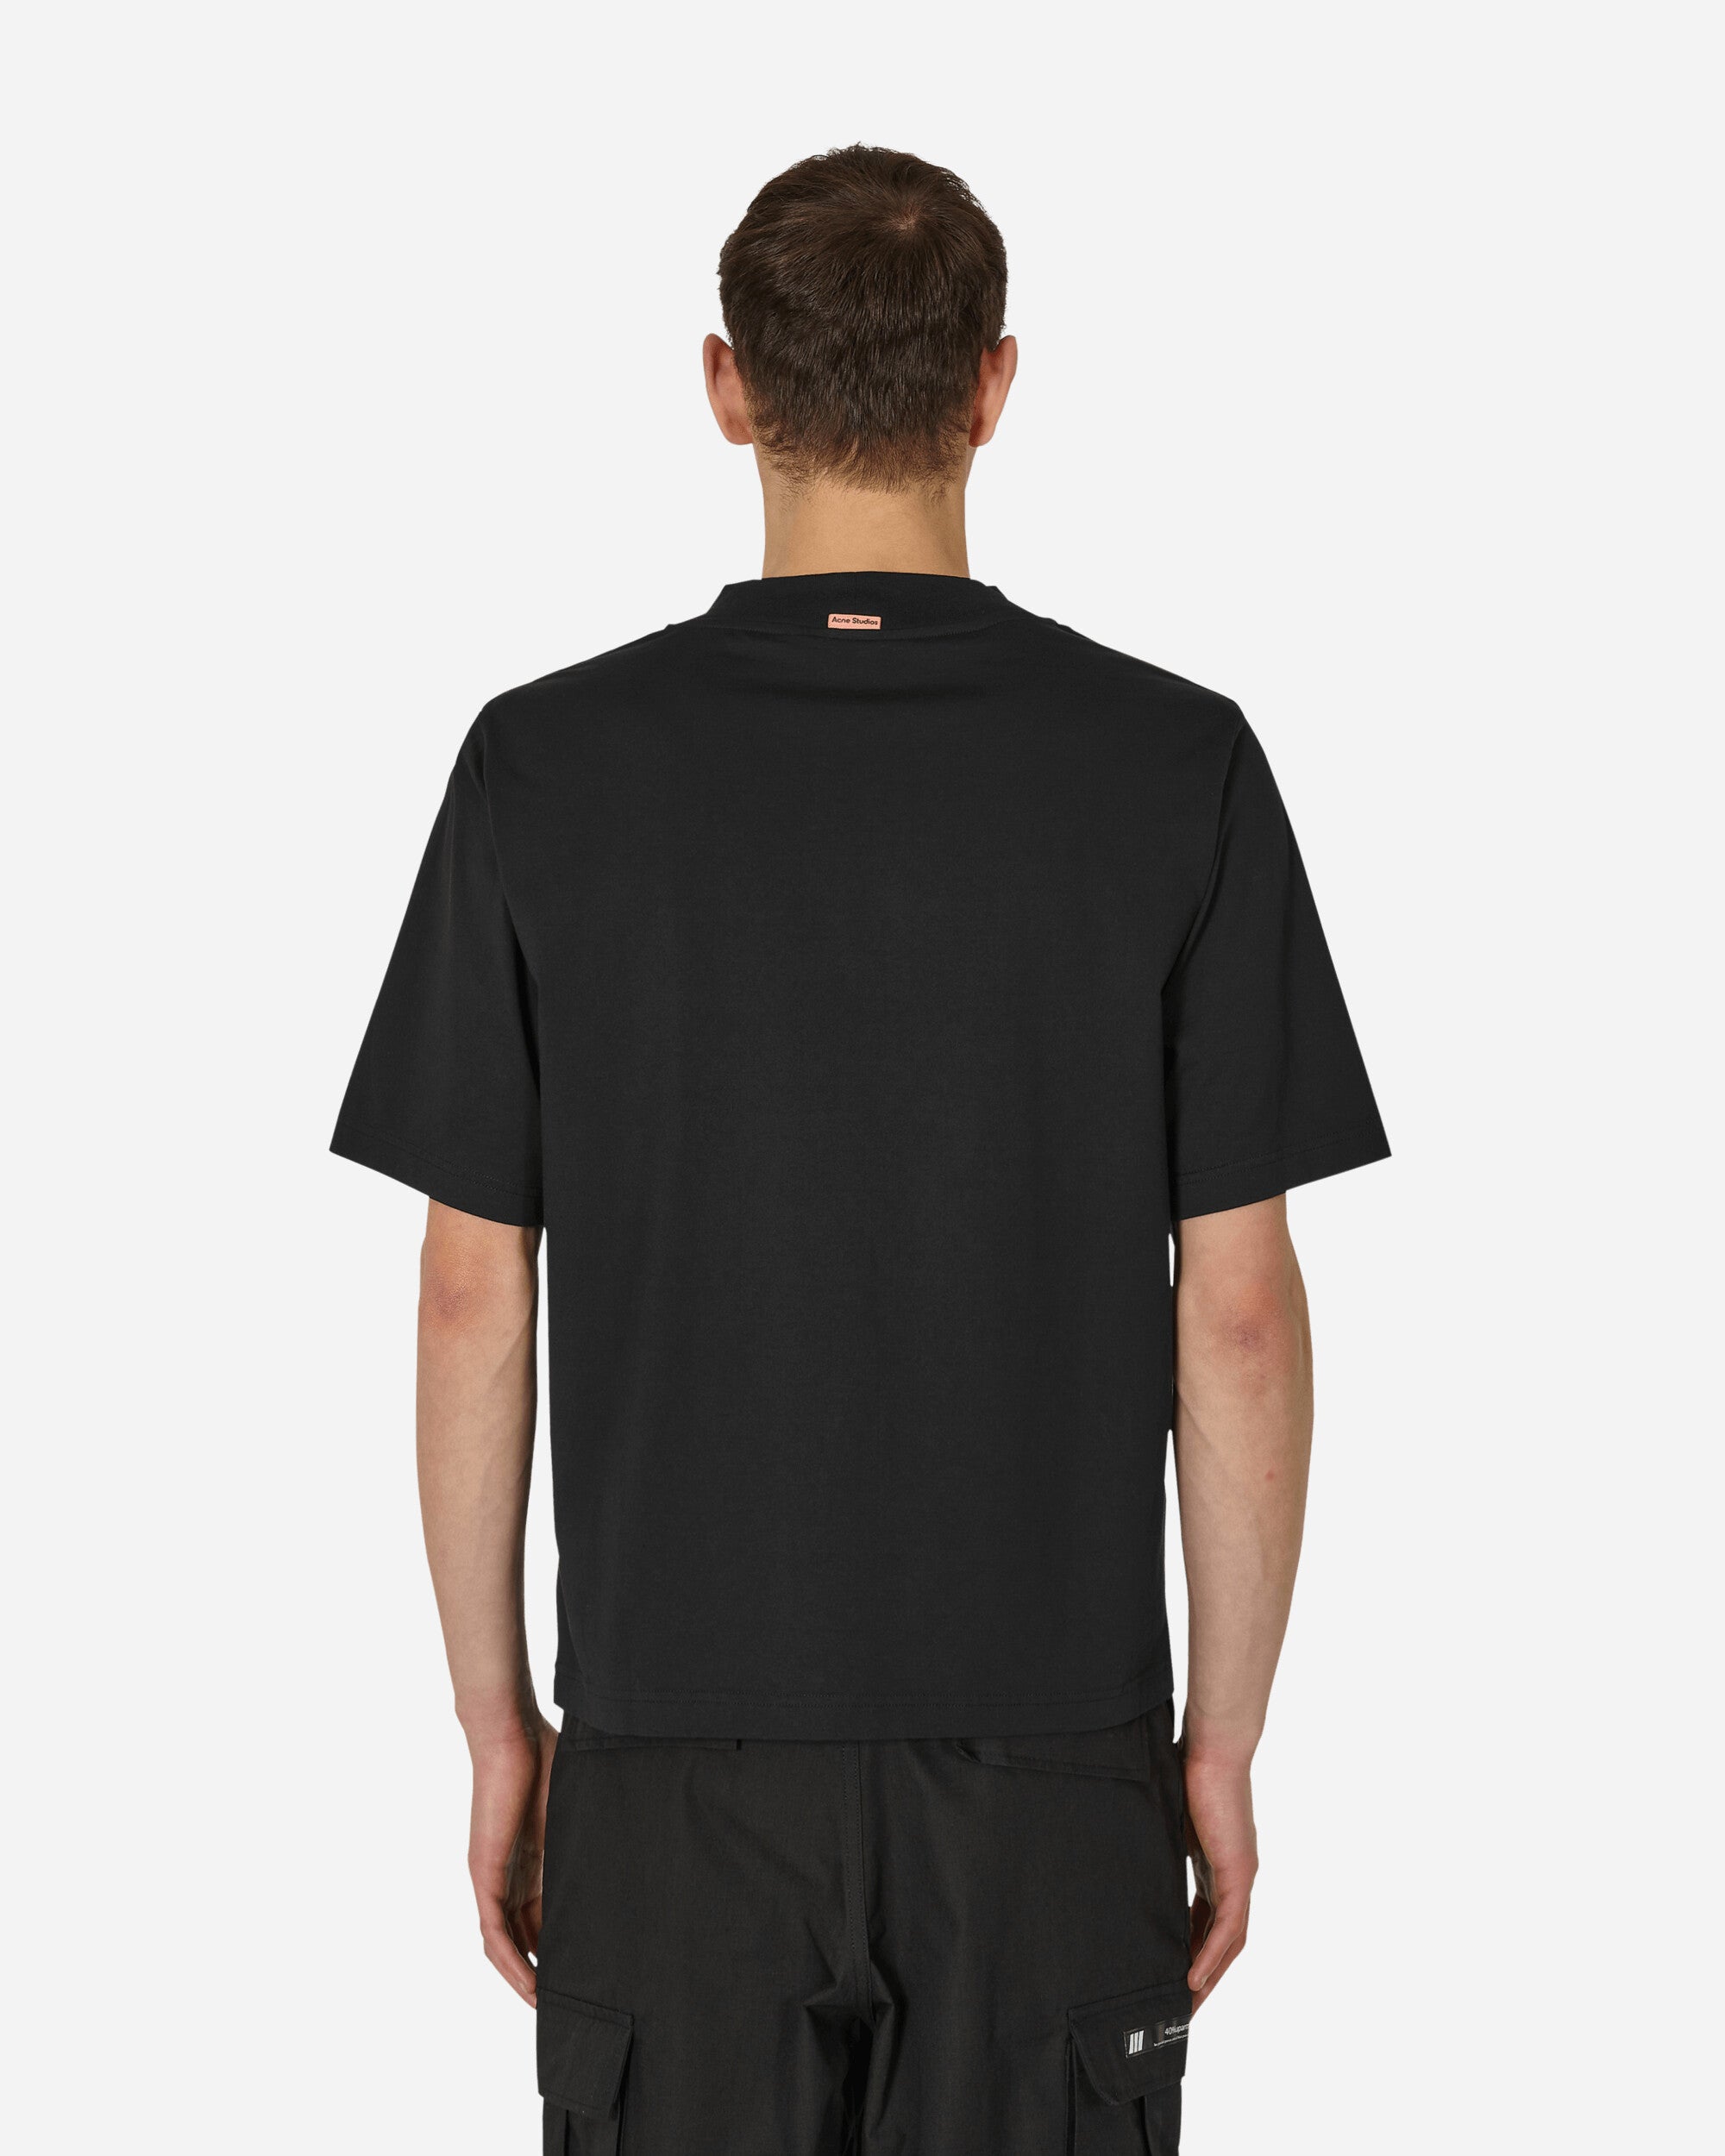 Acne Studios Fn-Ux-Tshi000011 Black T-Shirts Shortsleeve CL0195- 900